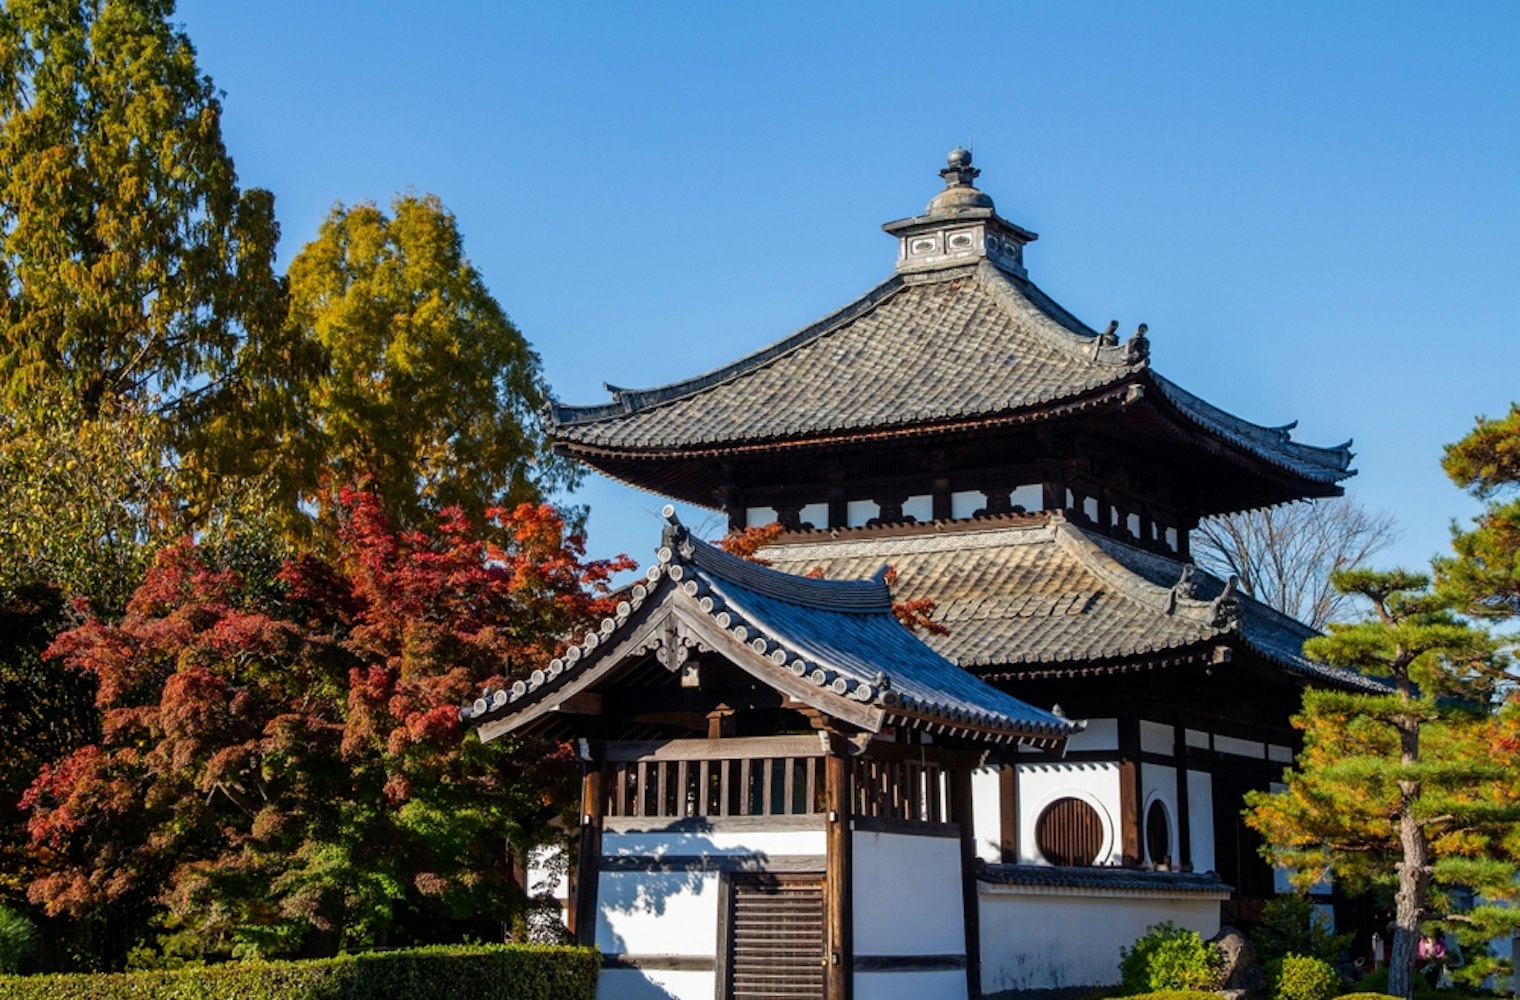 Tofuku-ji temple